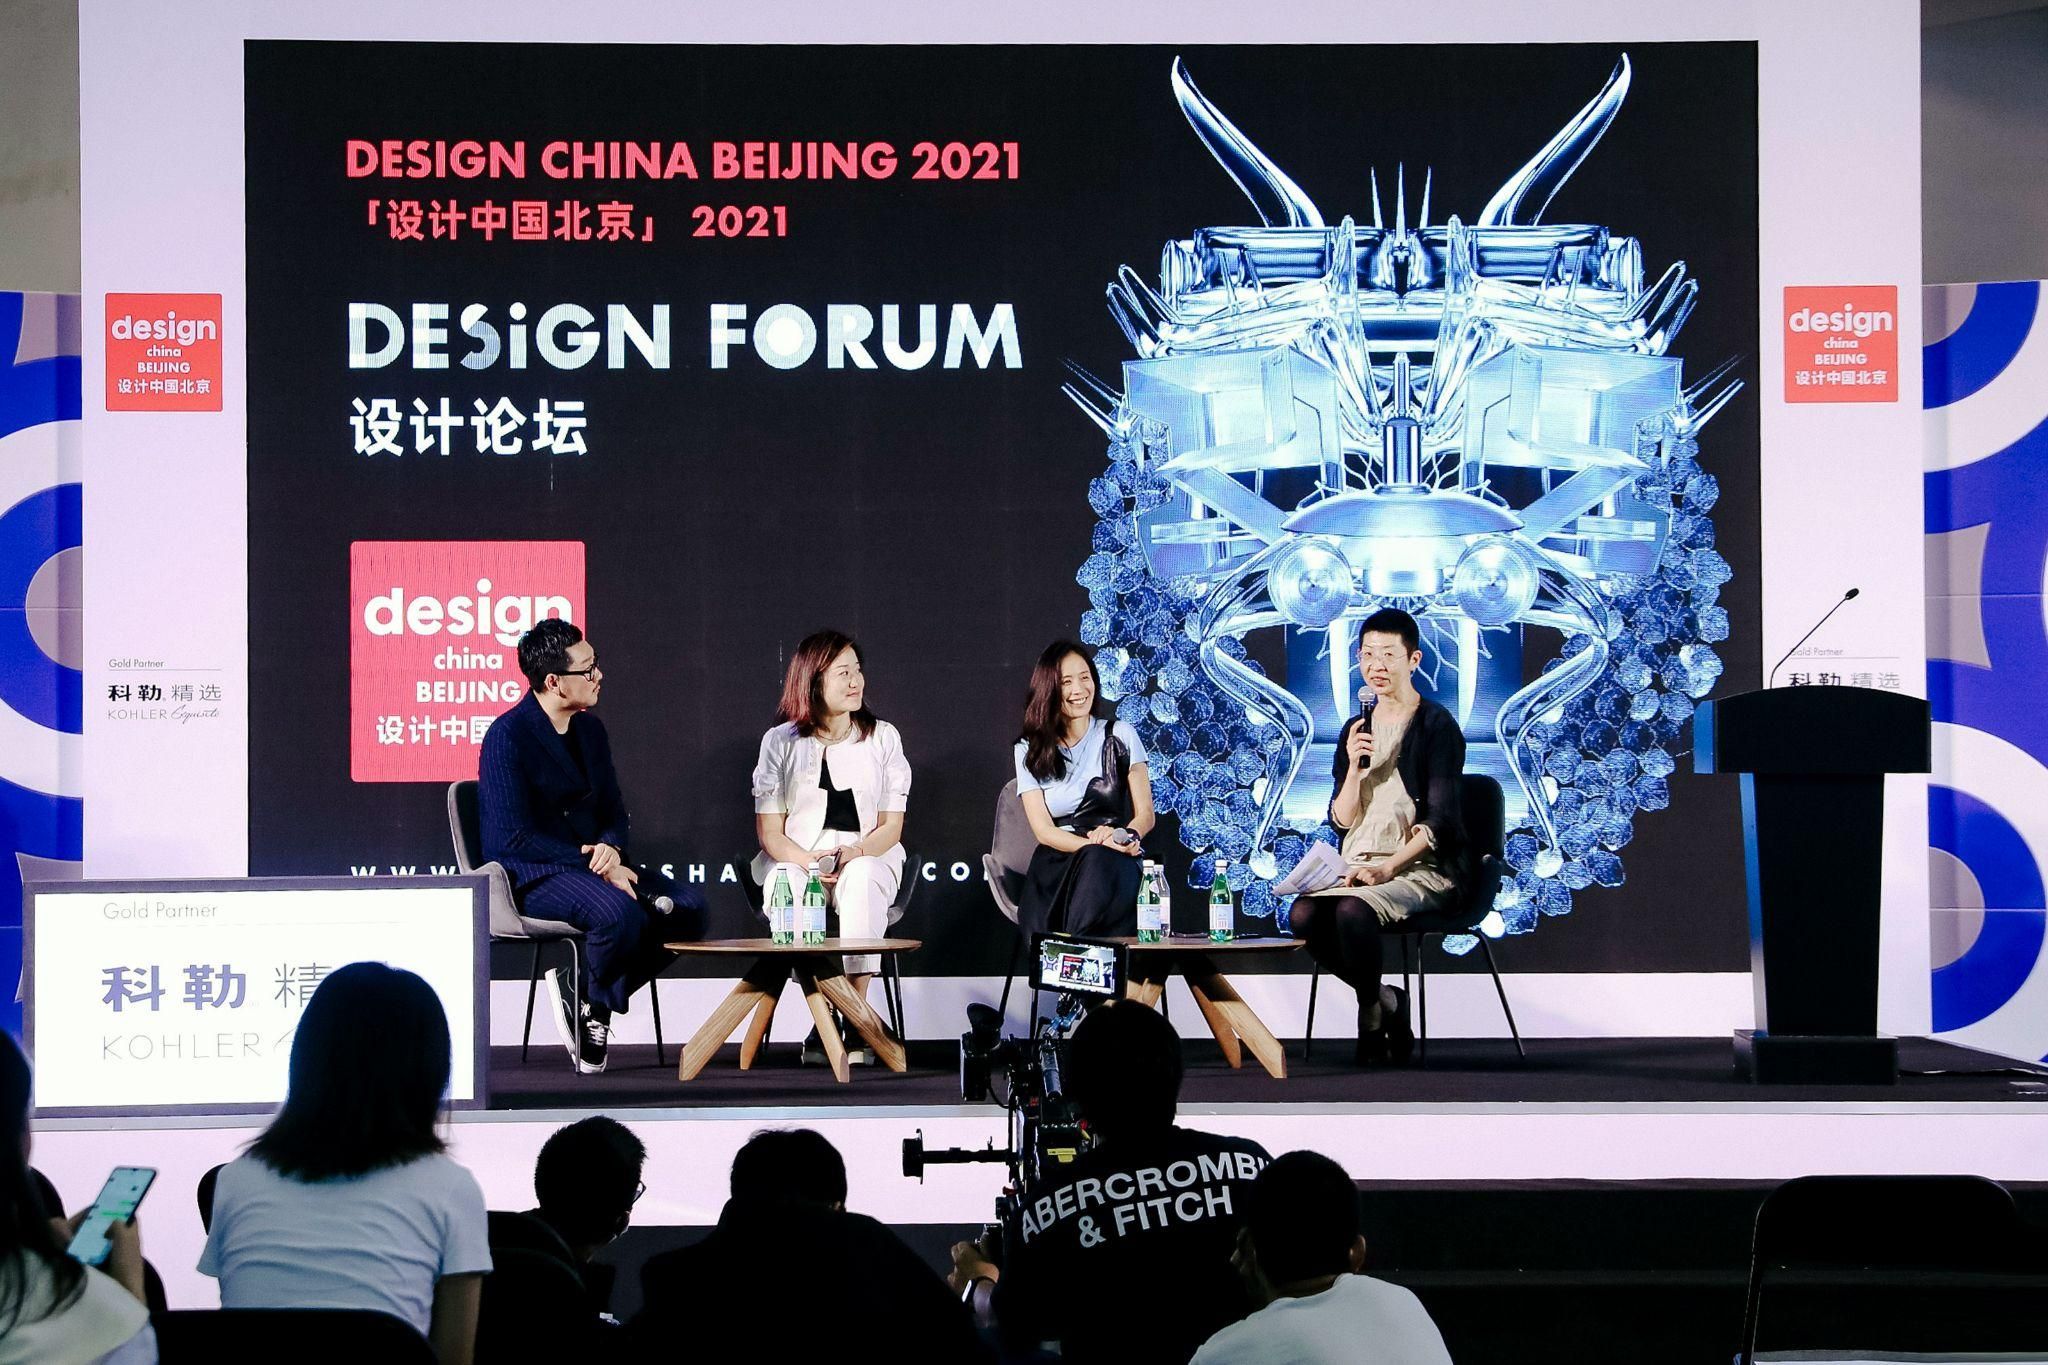 Design China Beijing’s world-renowned design forum